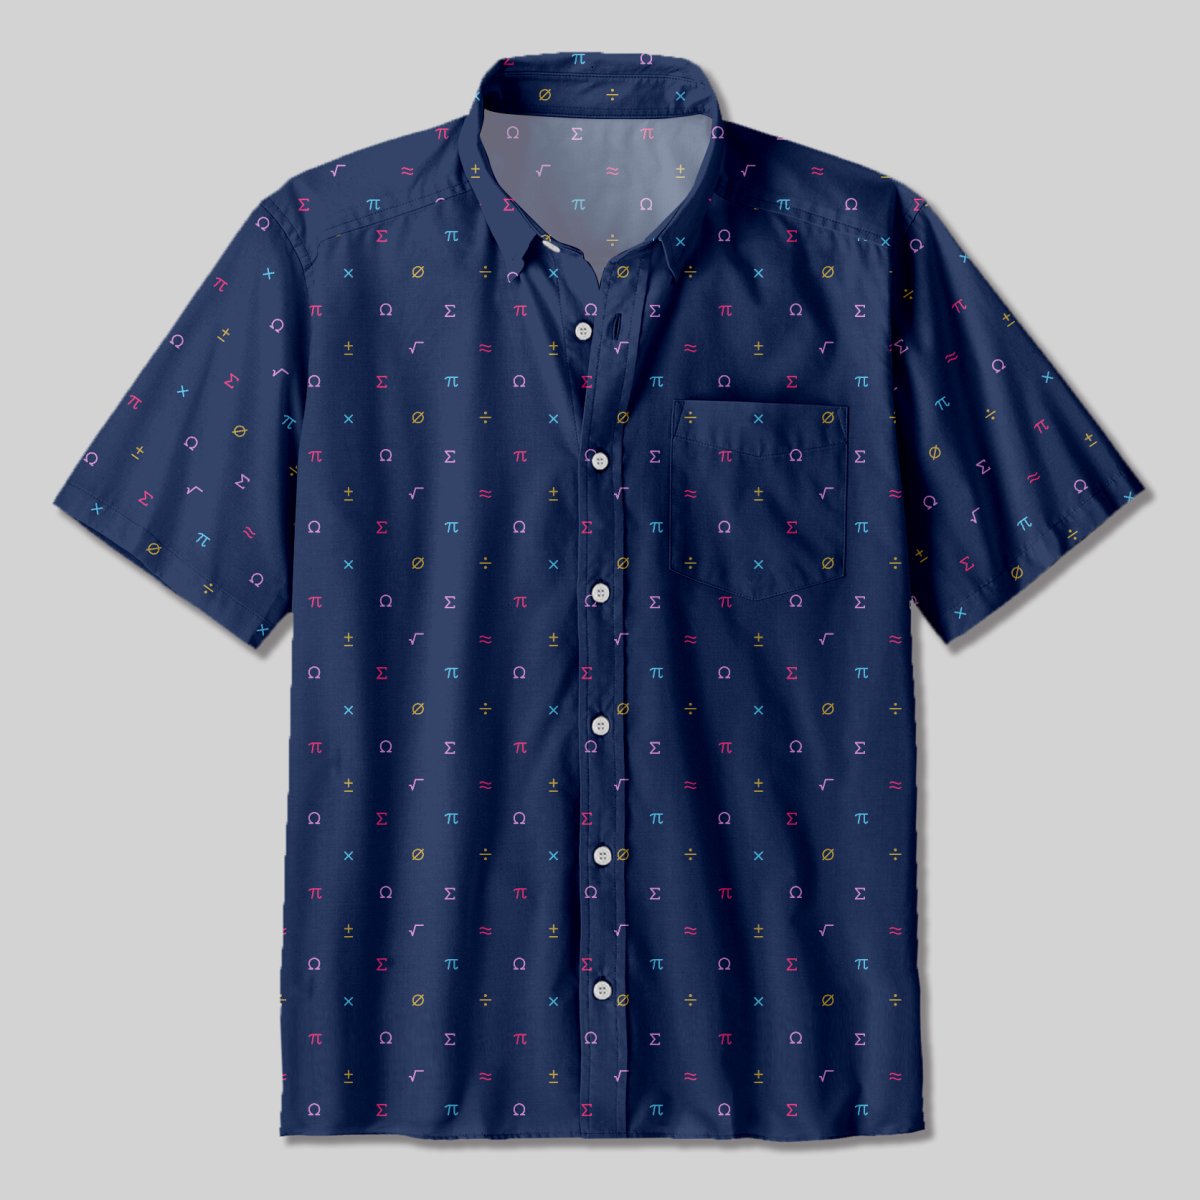 Mathematics Symbol Button Up Pocket Shirt - Geeksoutfit